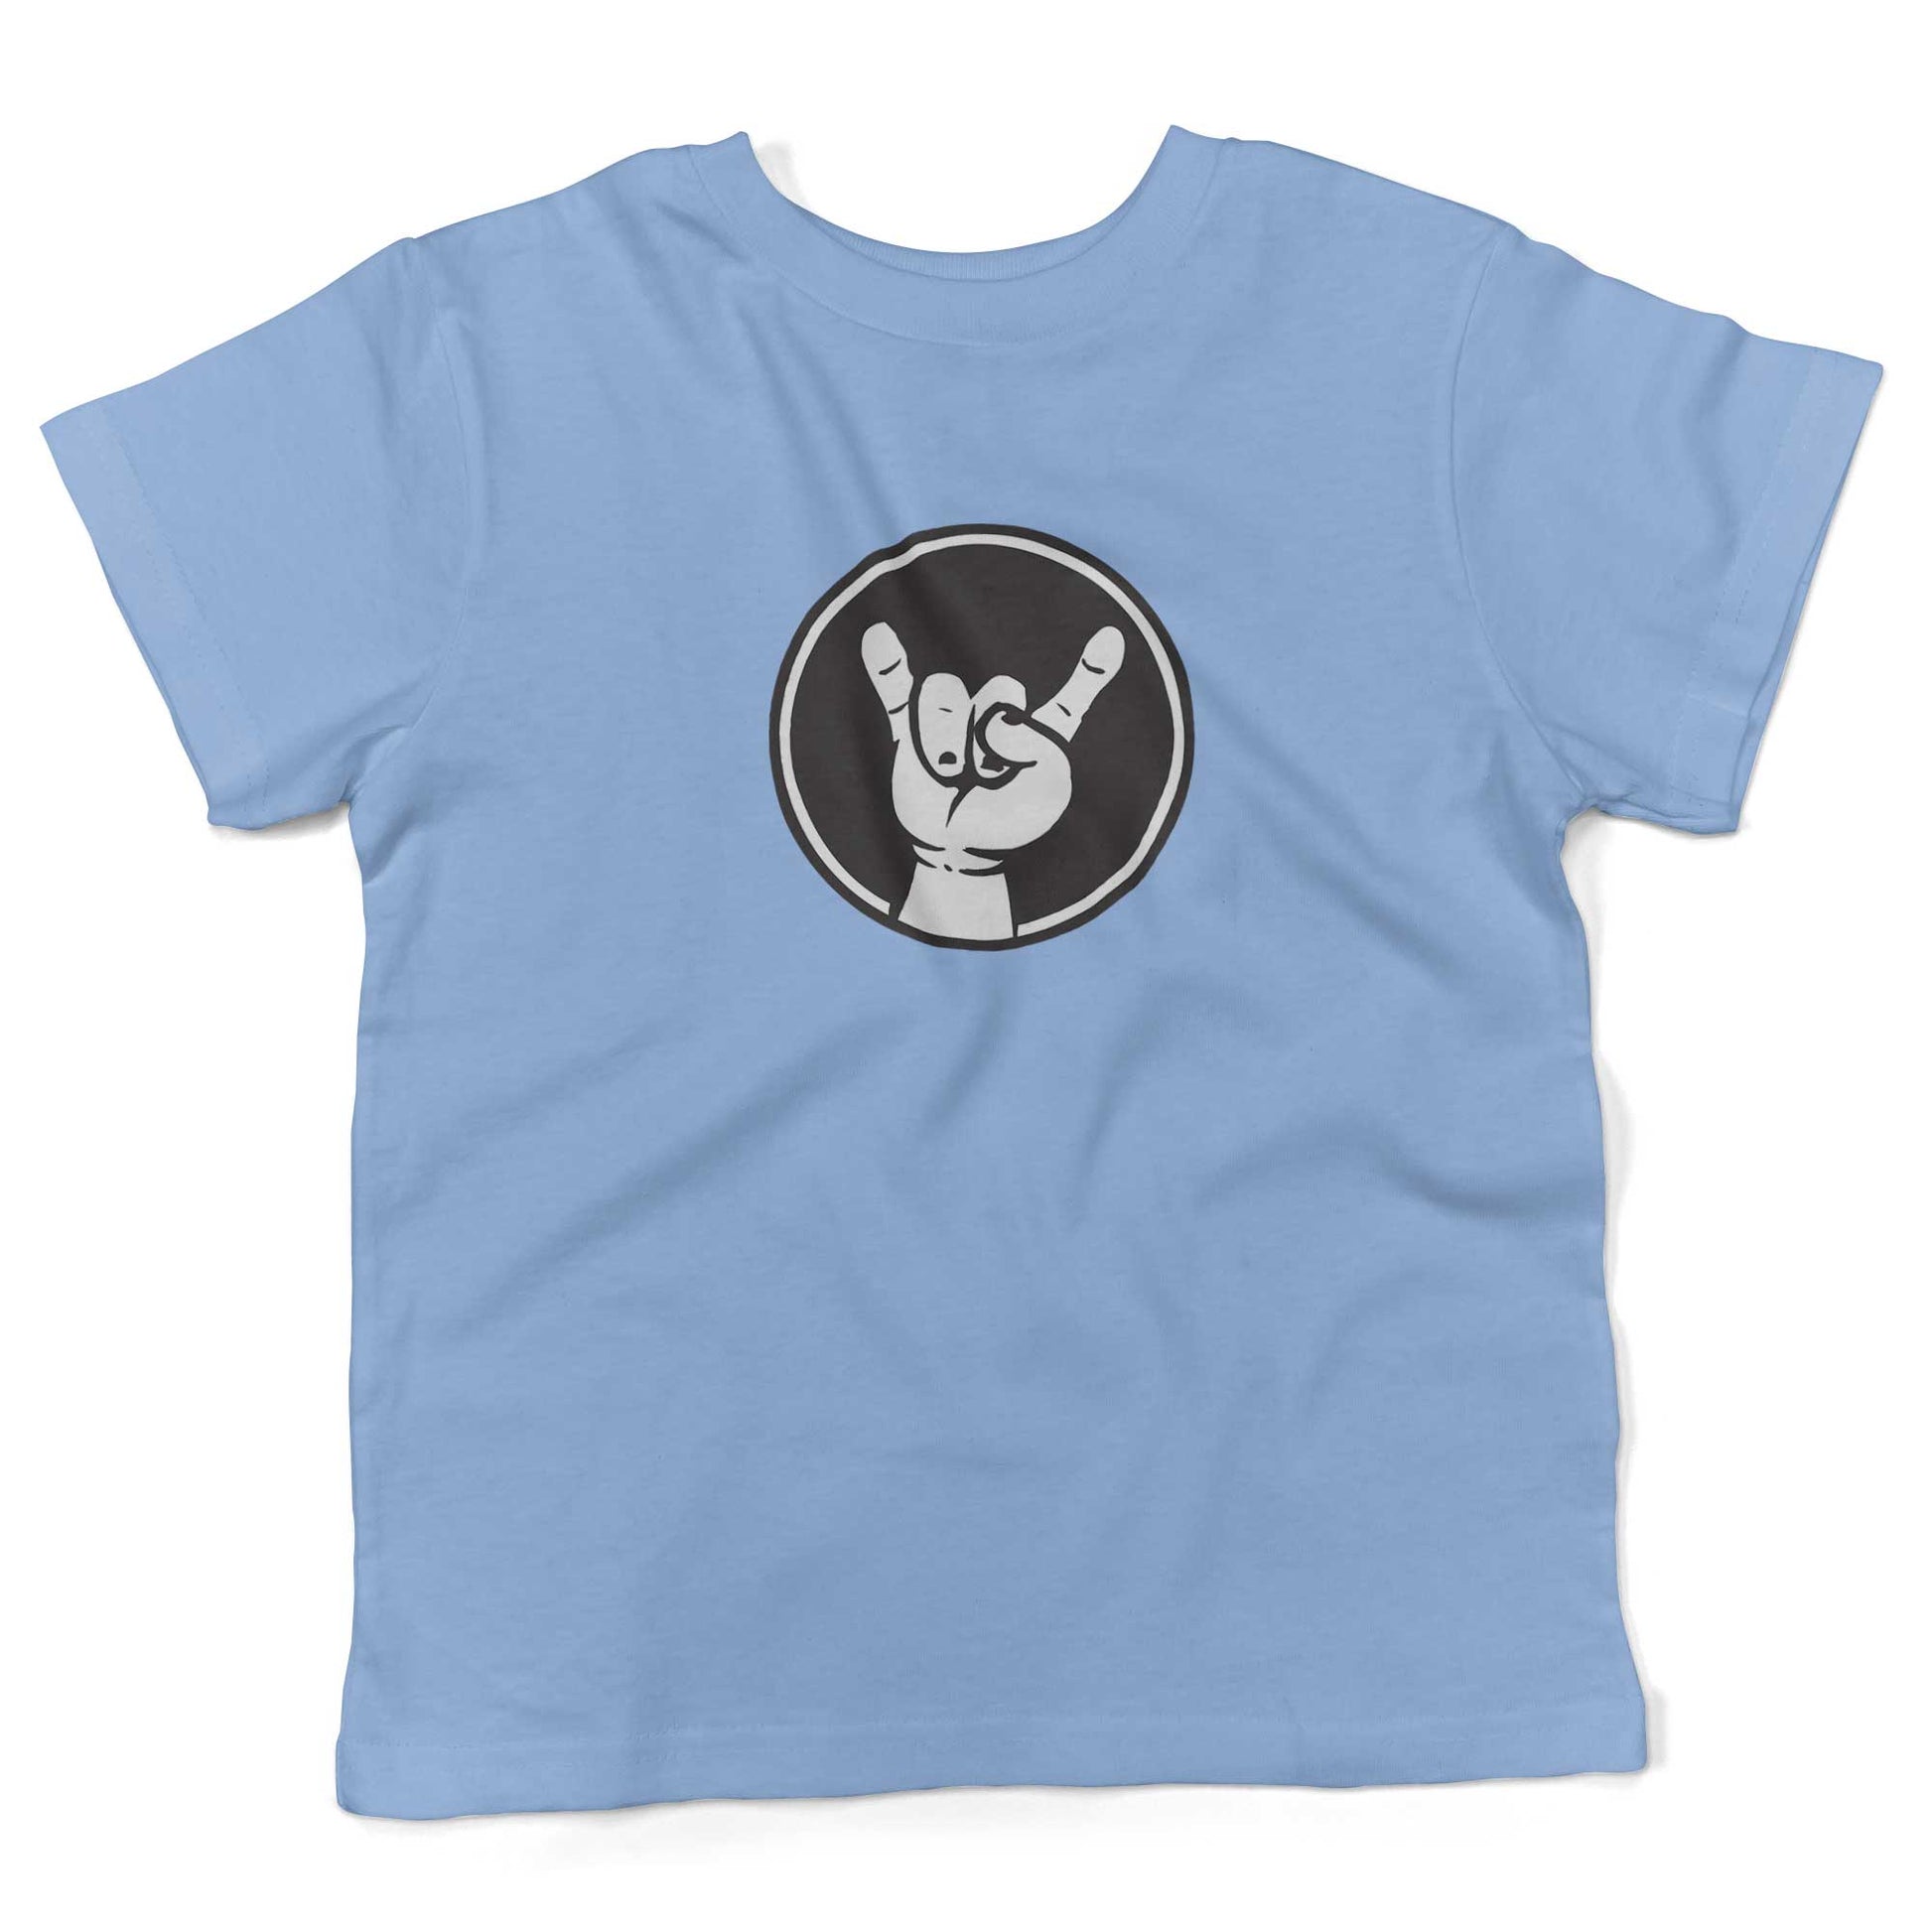 Rock Hand Symbol Toddler Shirt-Organic Baby Blue-2T